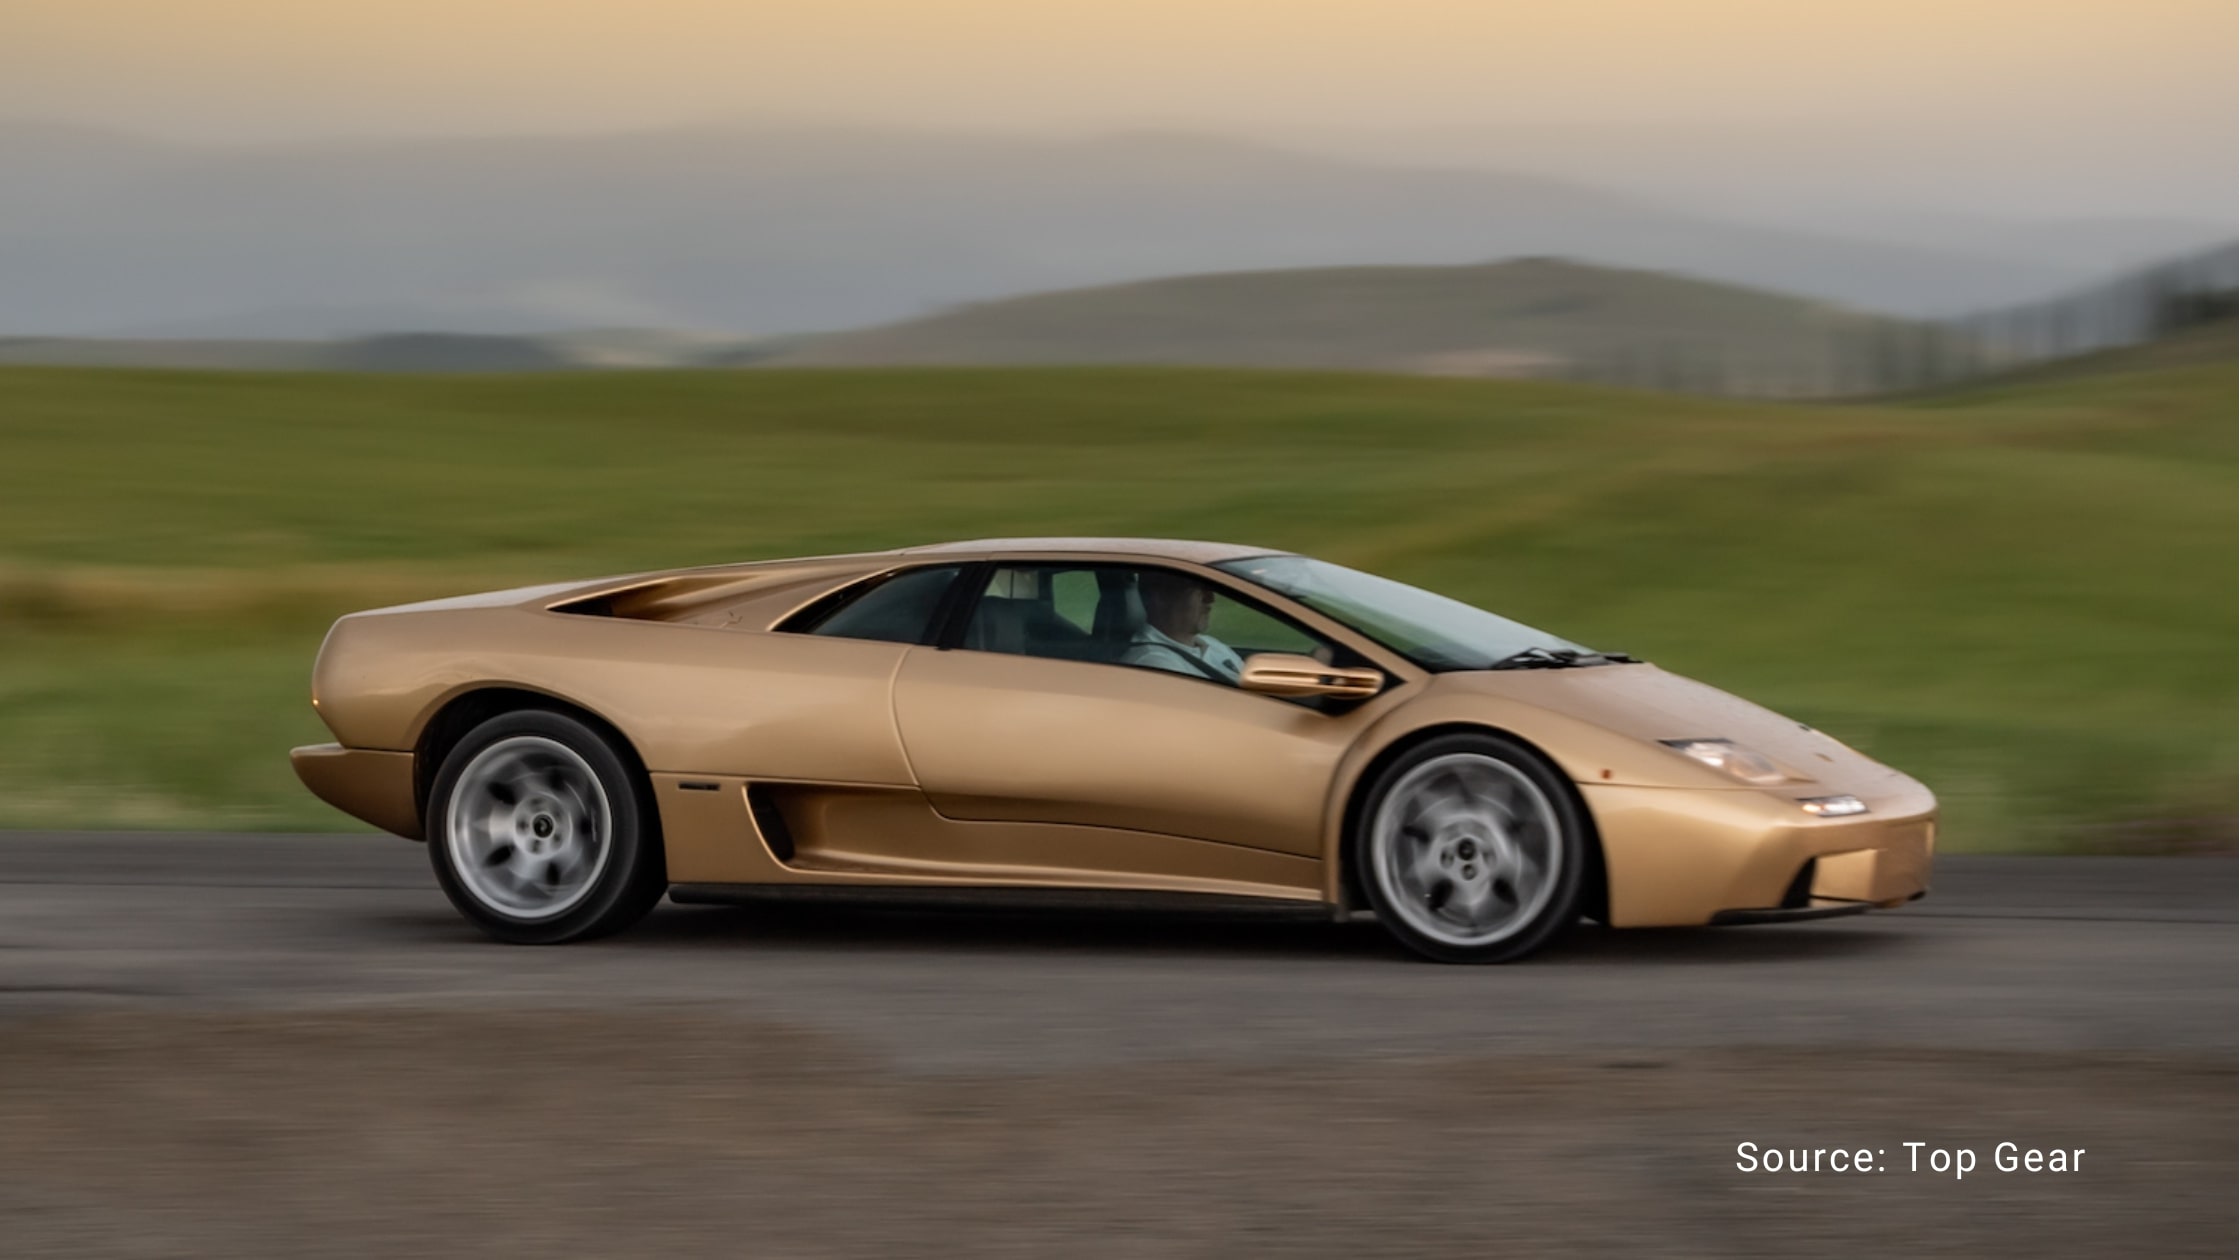 Car Model Names - gold Lamborghini Diablo